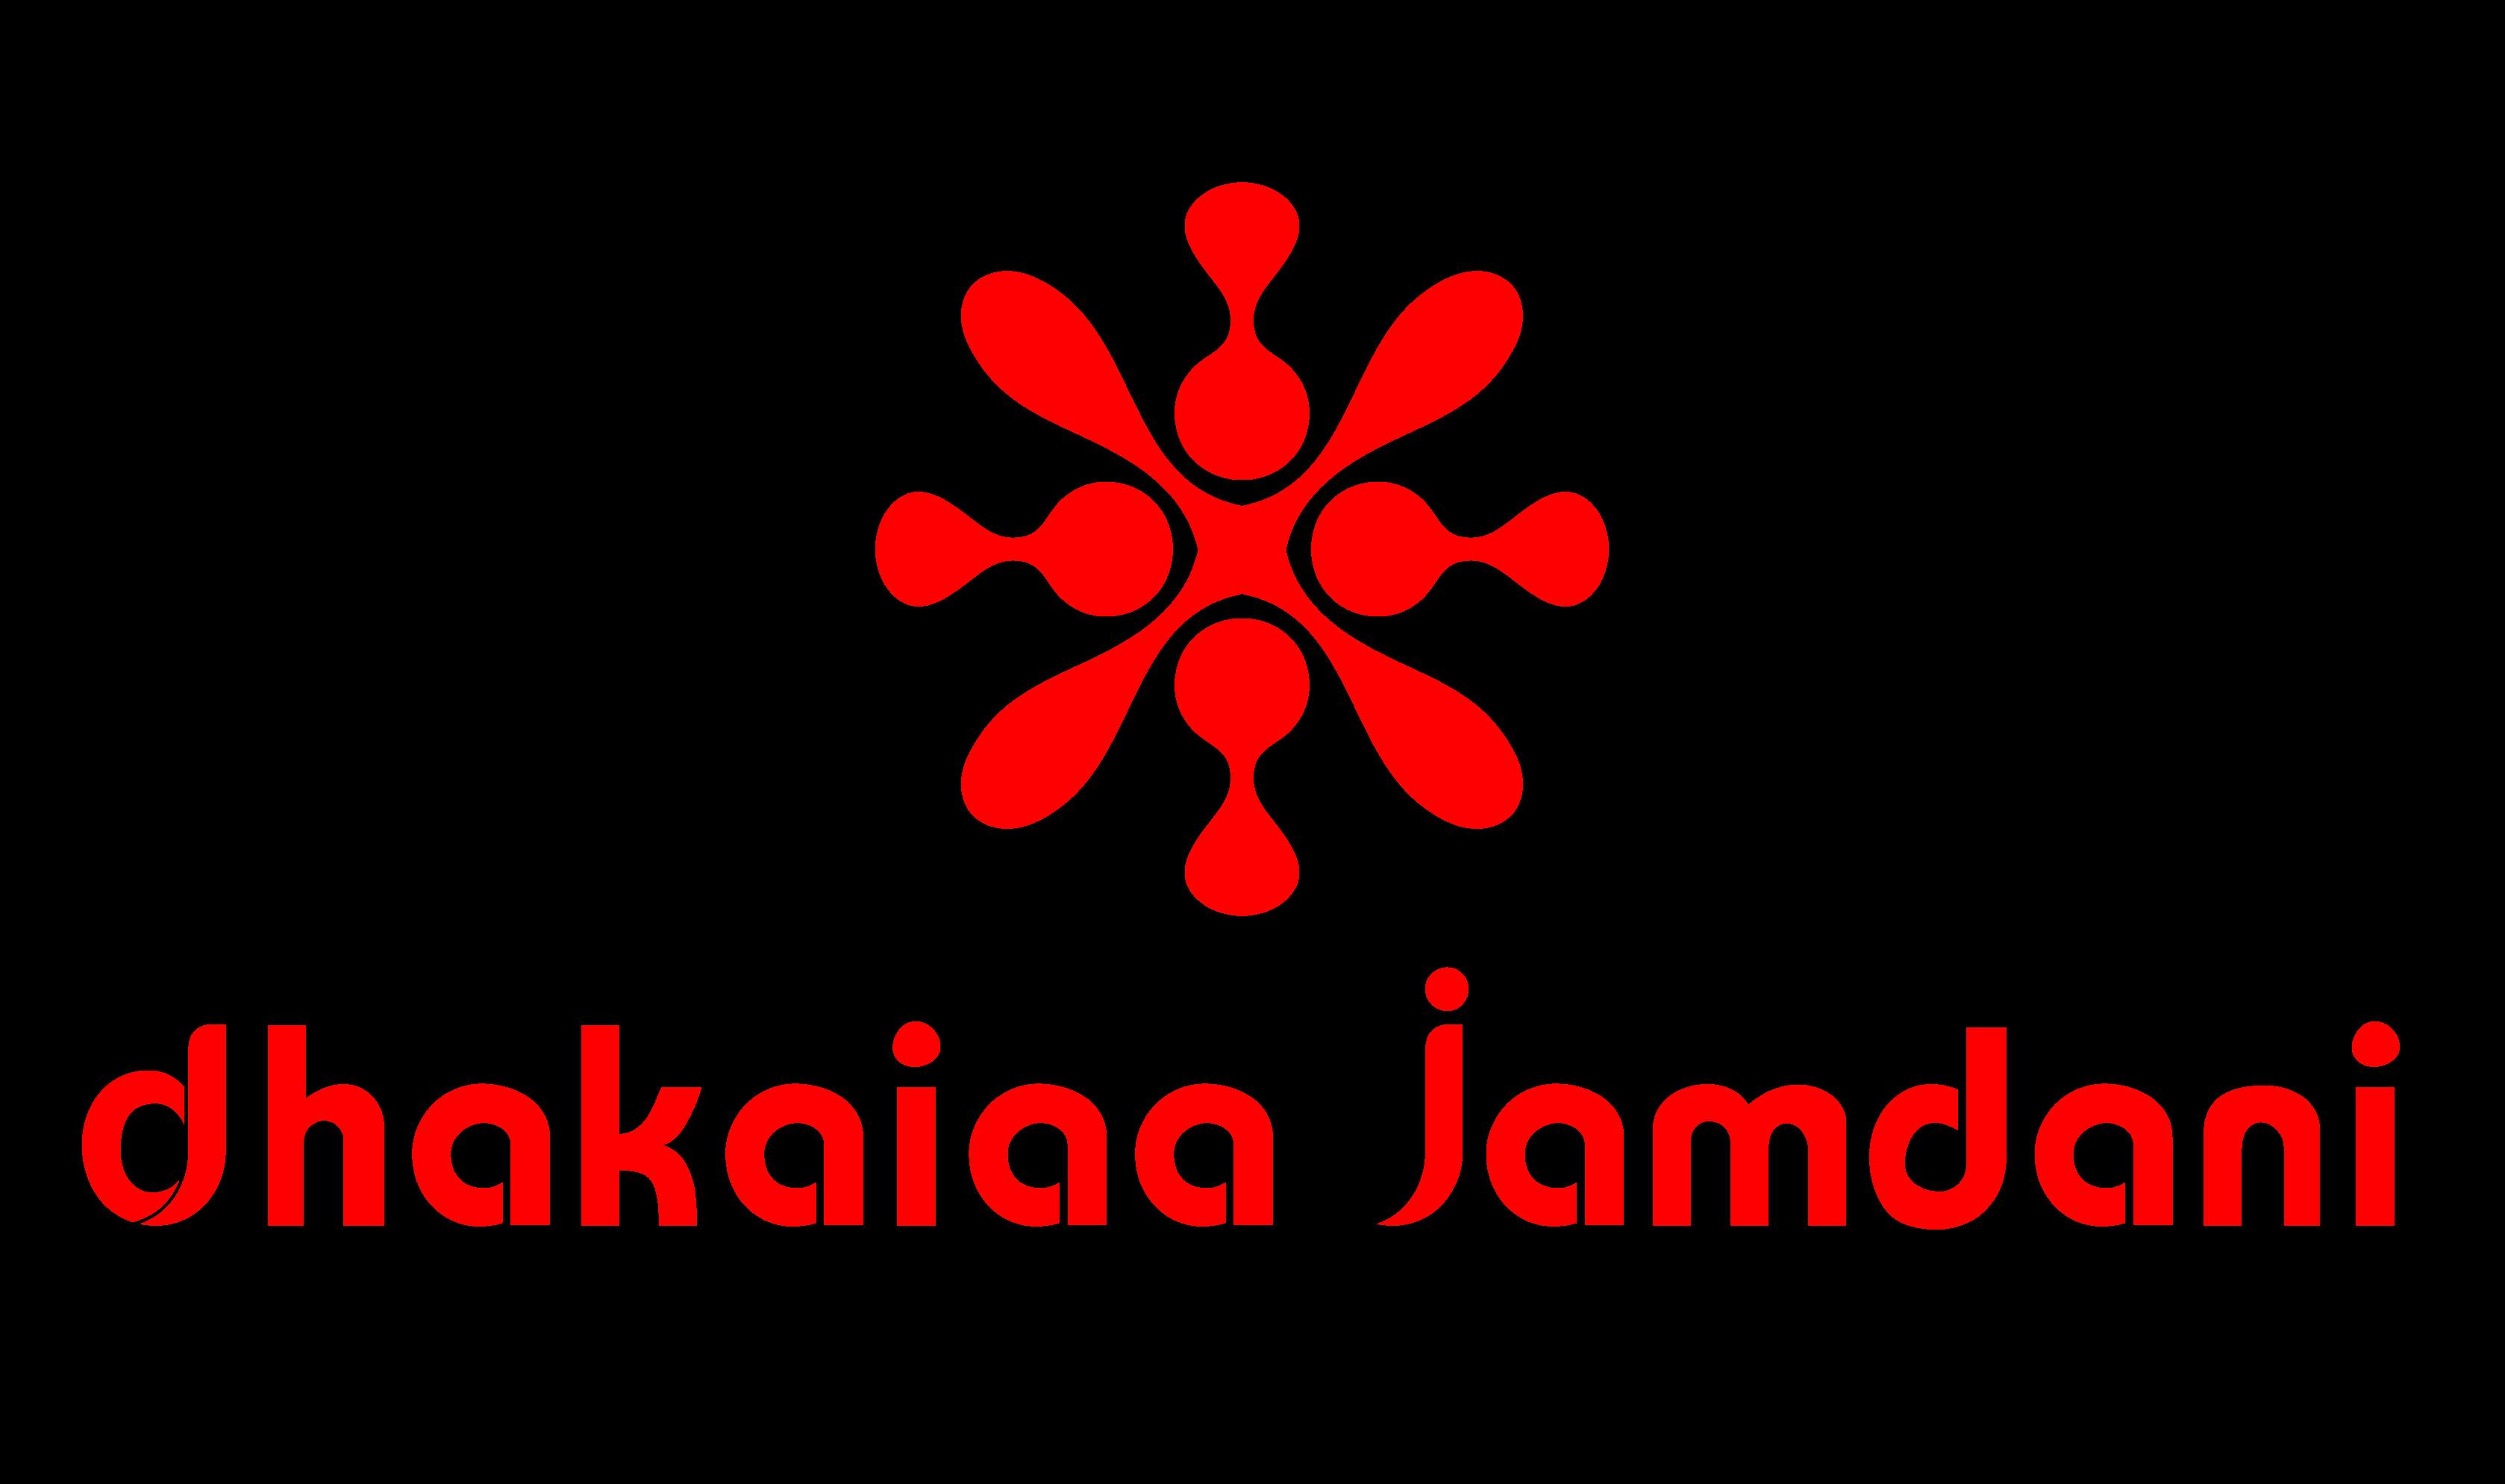 Dhakaiaa Jamdani